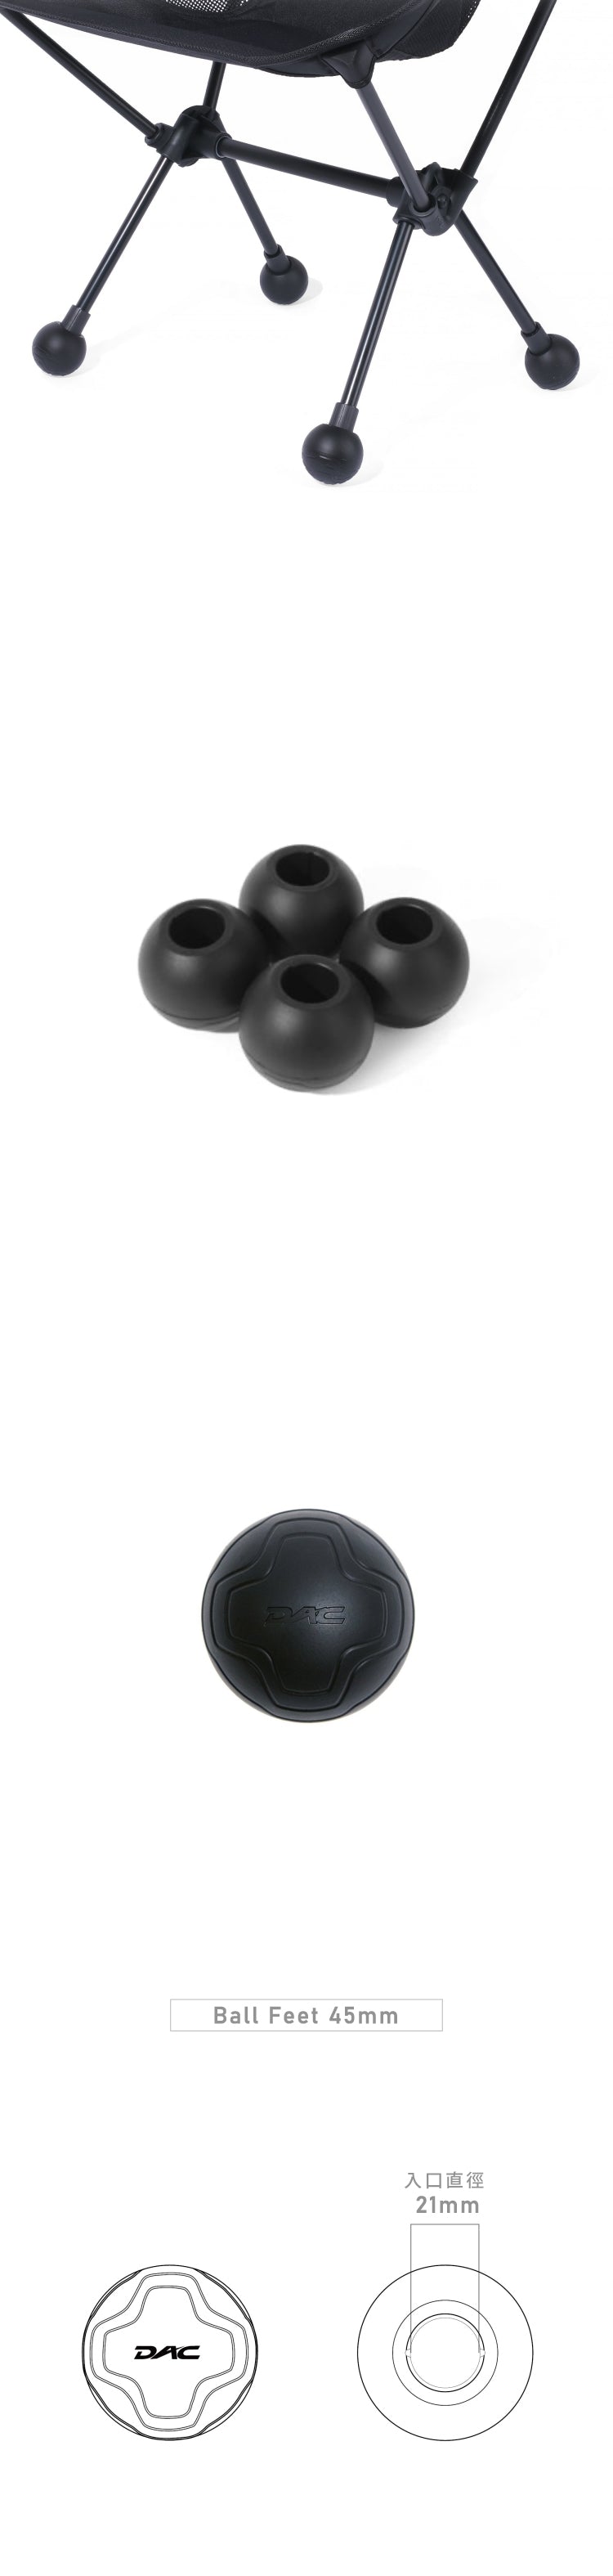 Helinox • 椅腳球 45/55mm (黑) 1套4入 Ball Fit™ 45/55mm